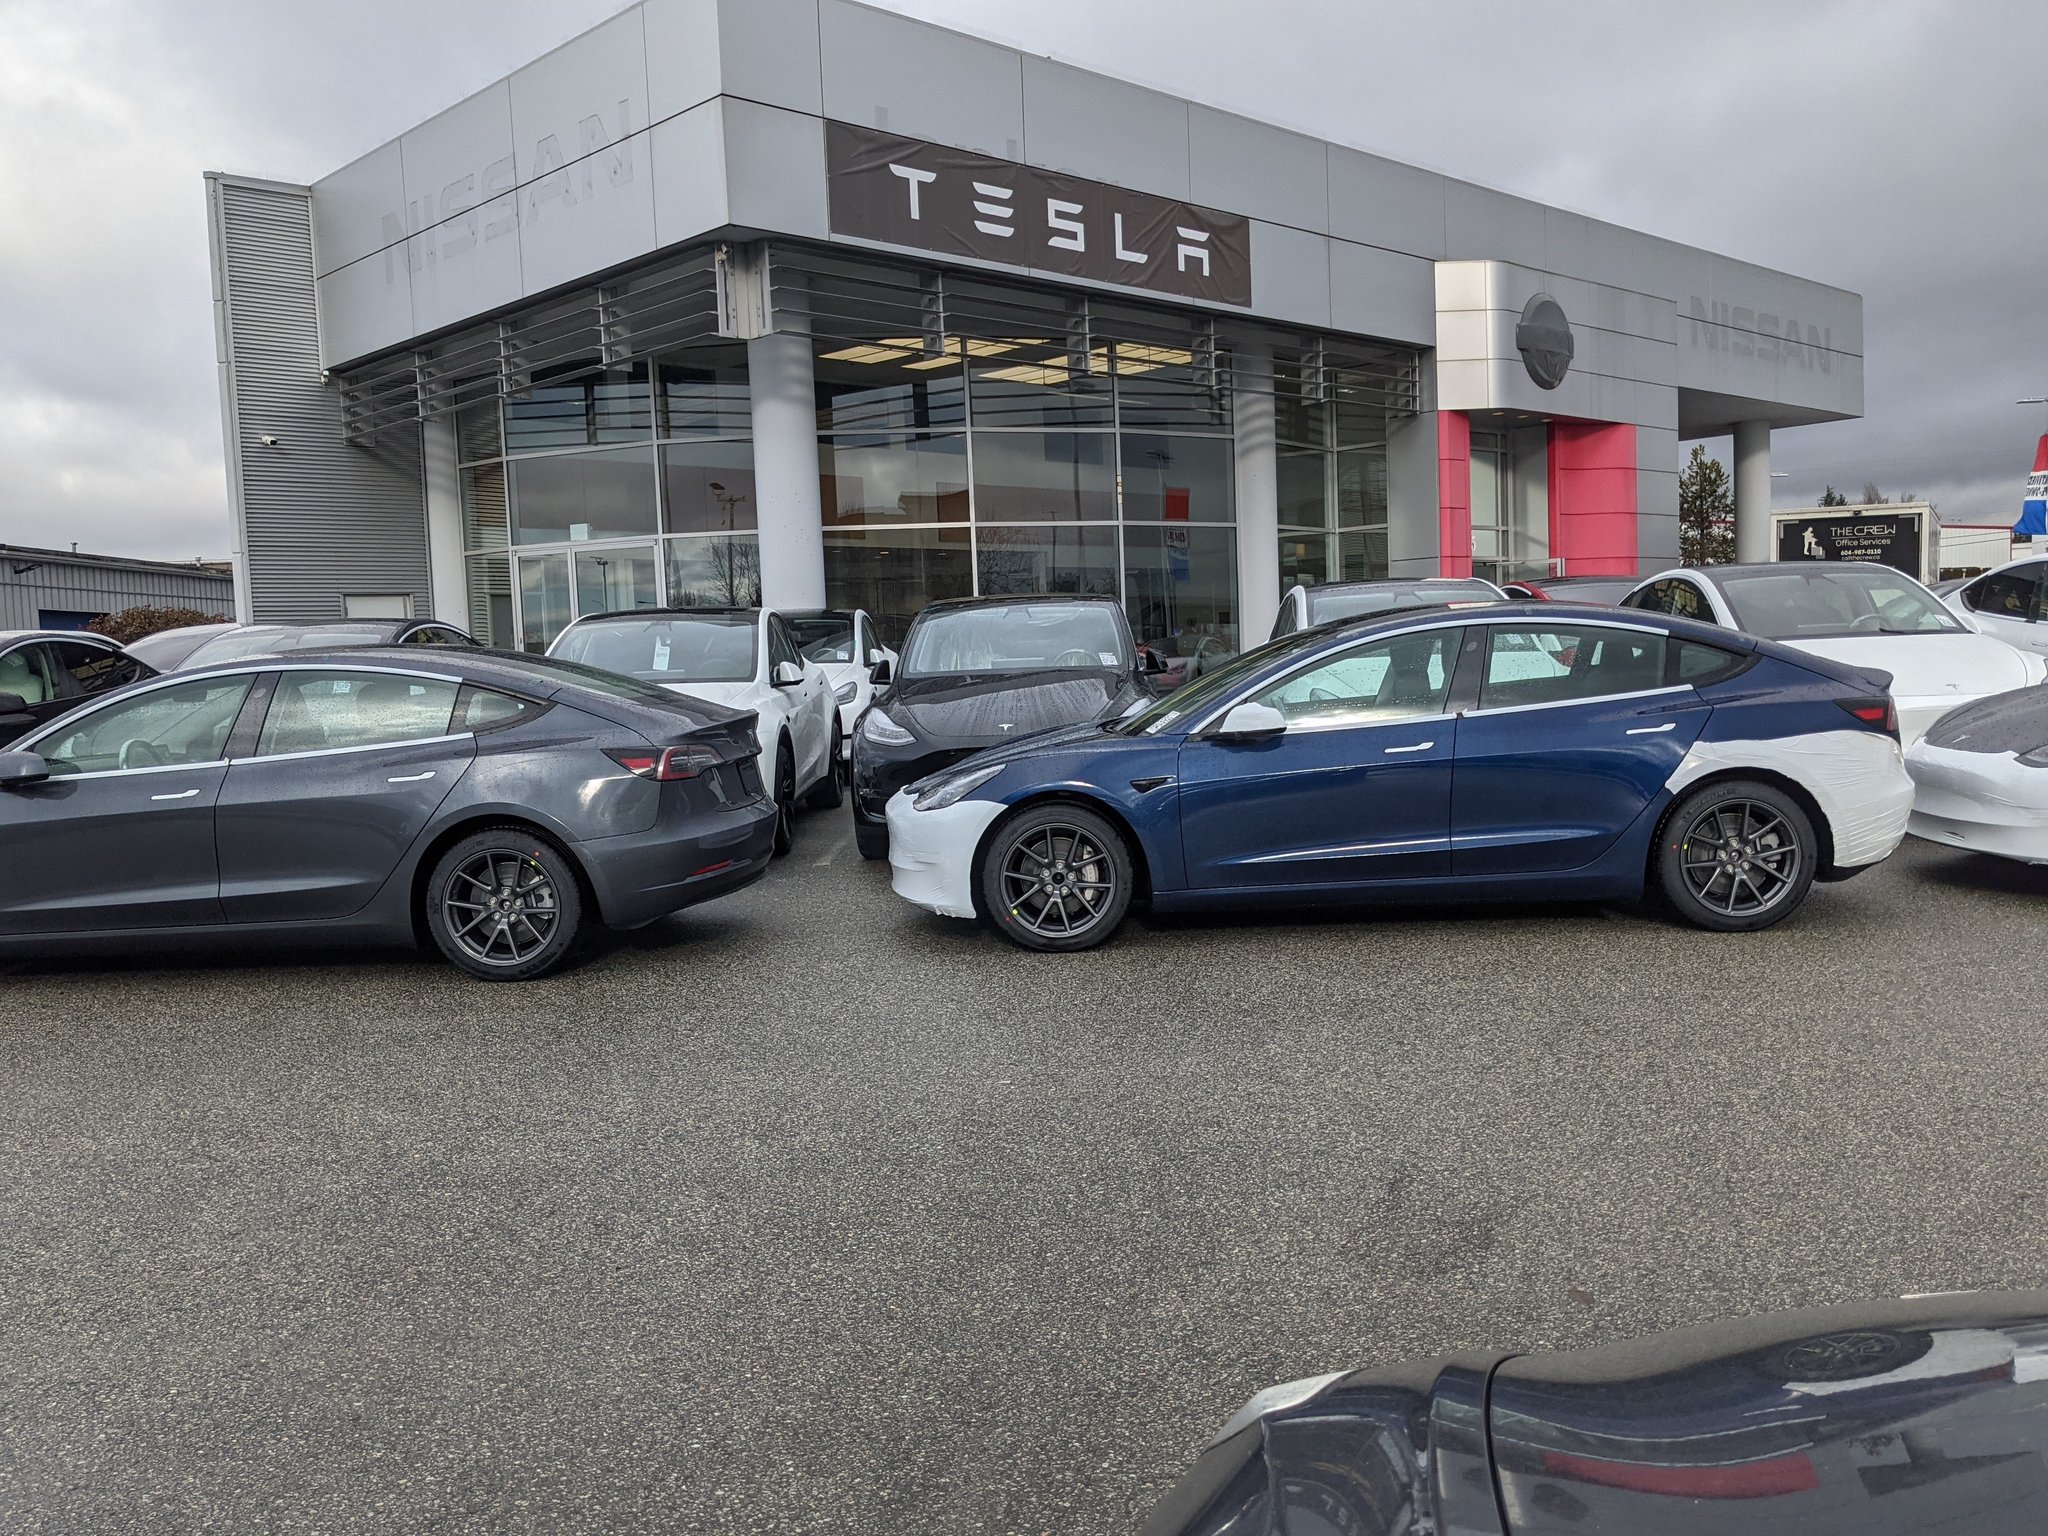 Tesla Surrey